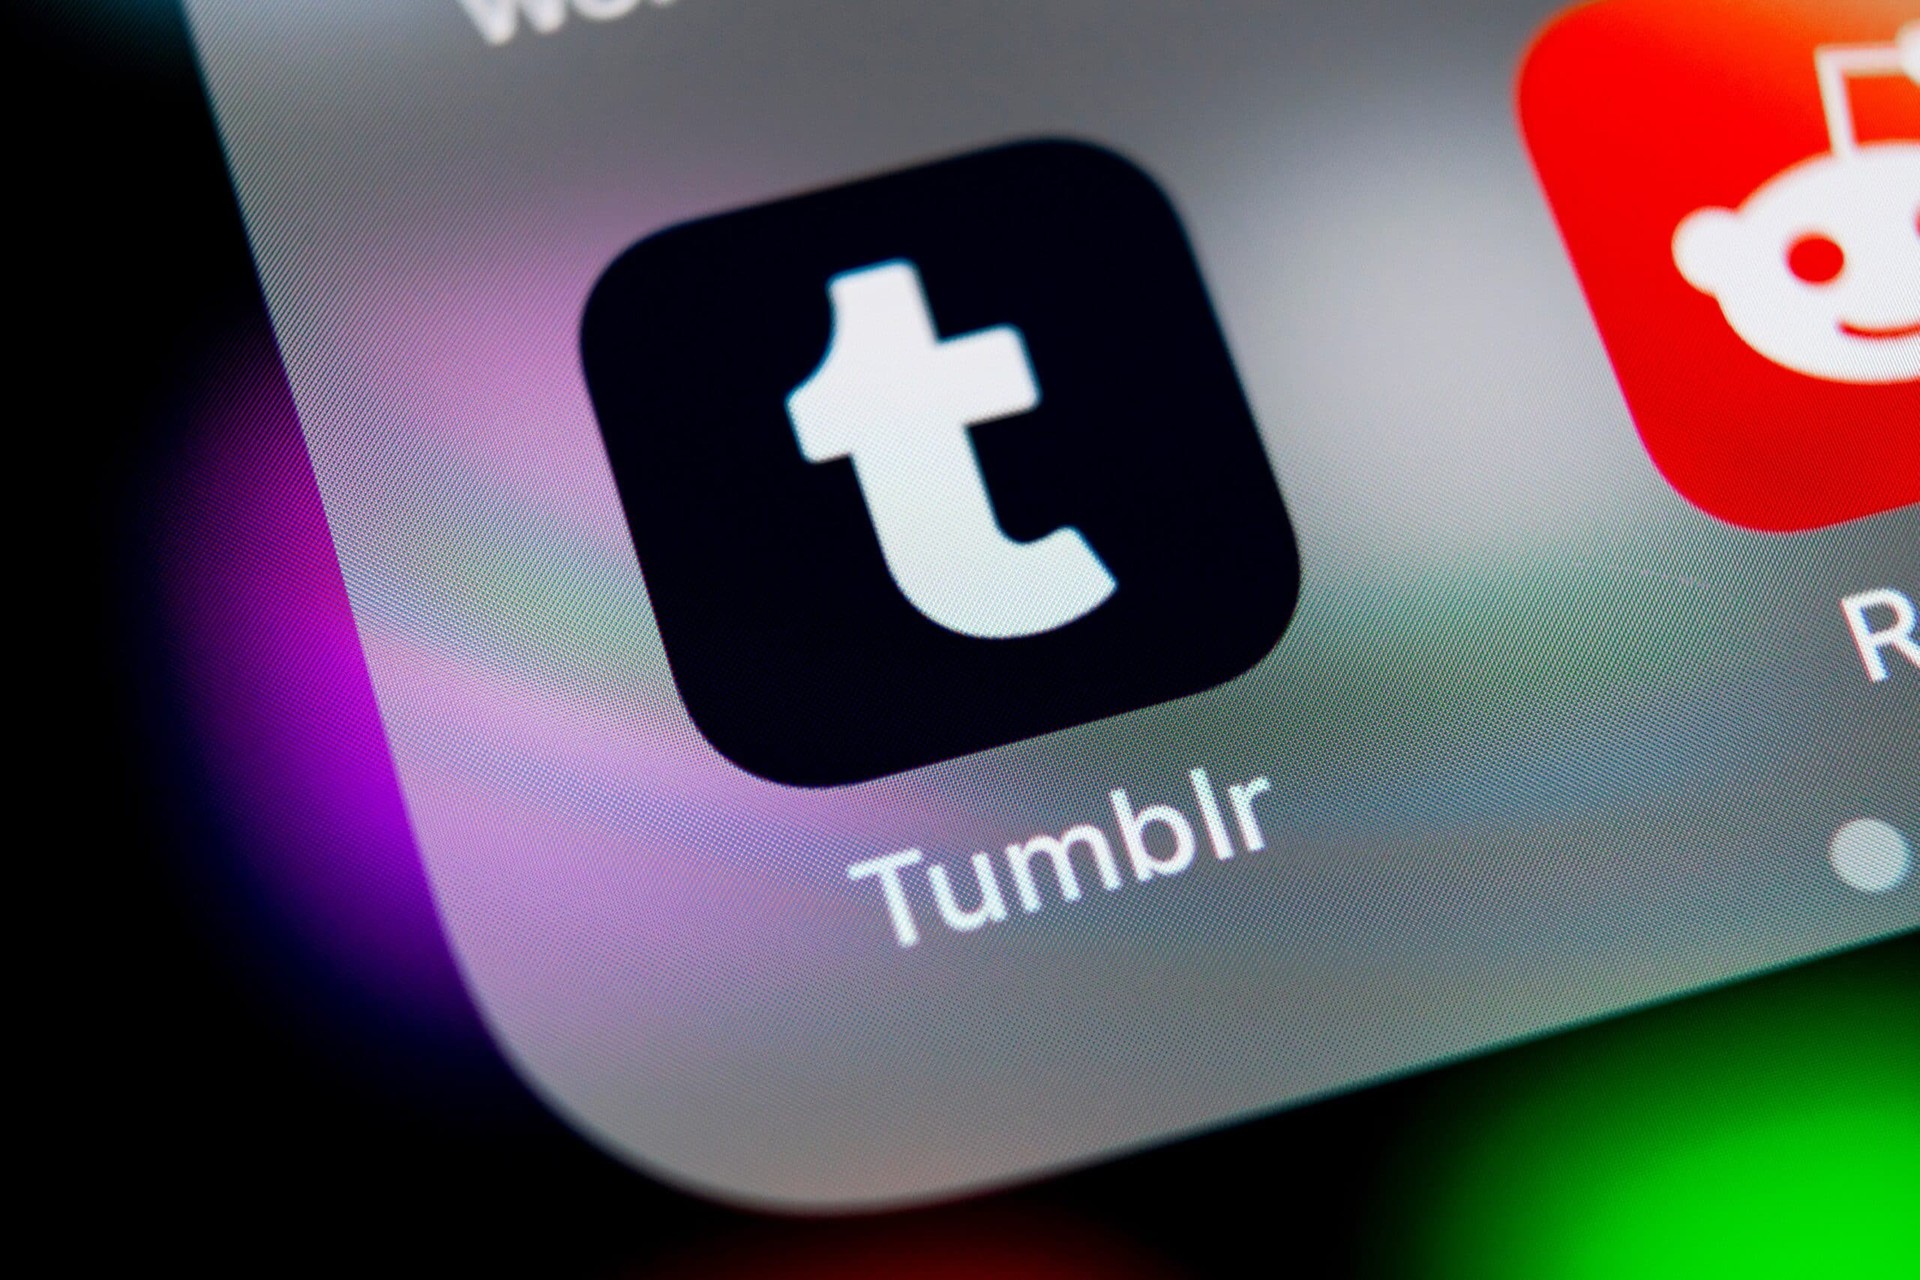 Tumblr bloqueia centenas de termos de pesquisa no iOS para evitar banimento